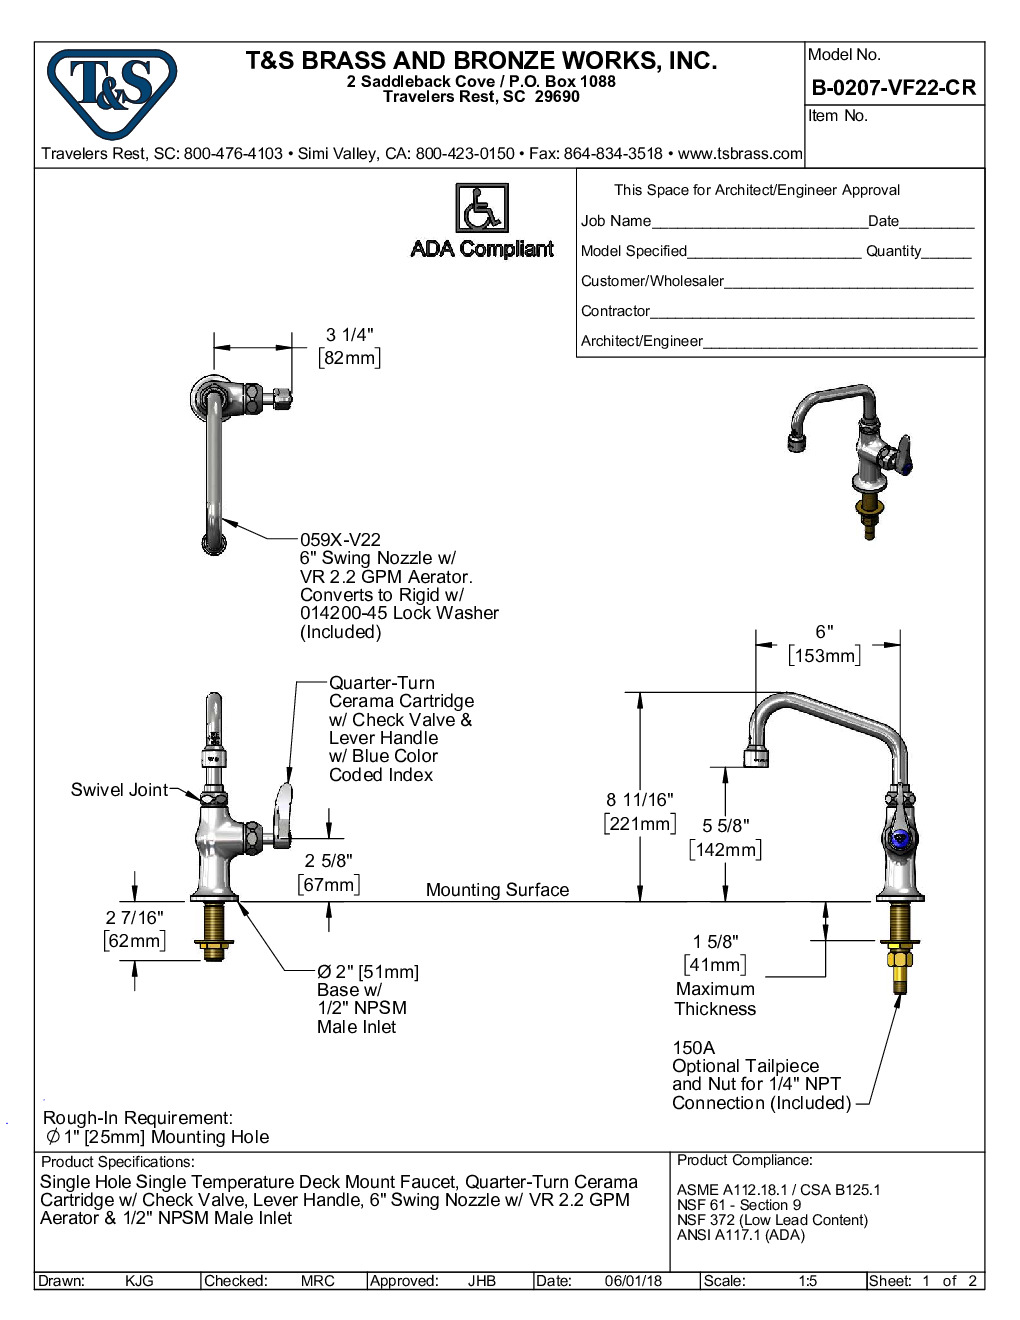 T&S Brass B-0207-VF22-CR Pantry Faucet